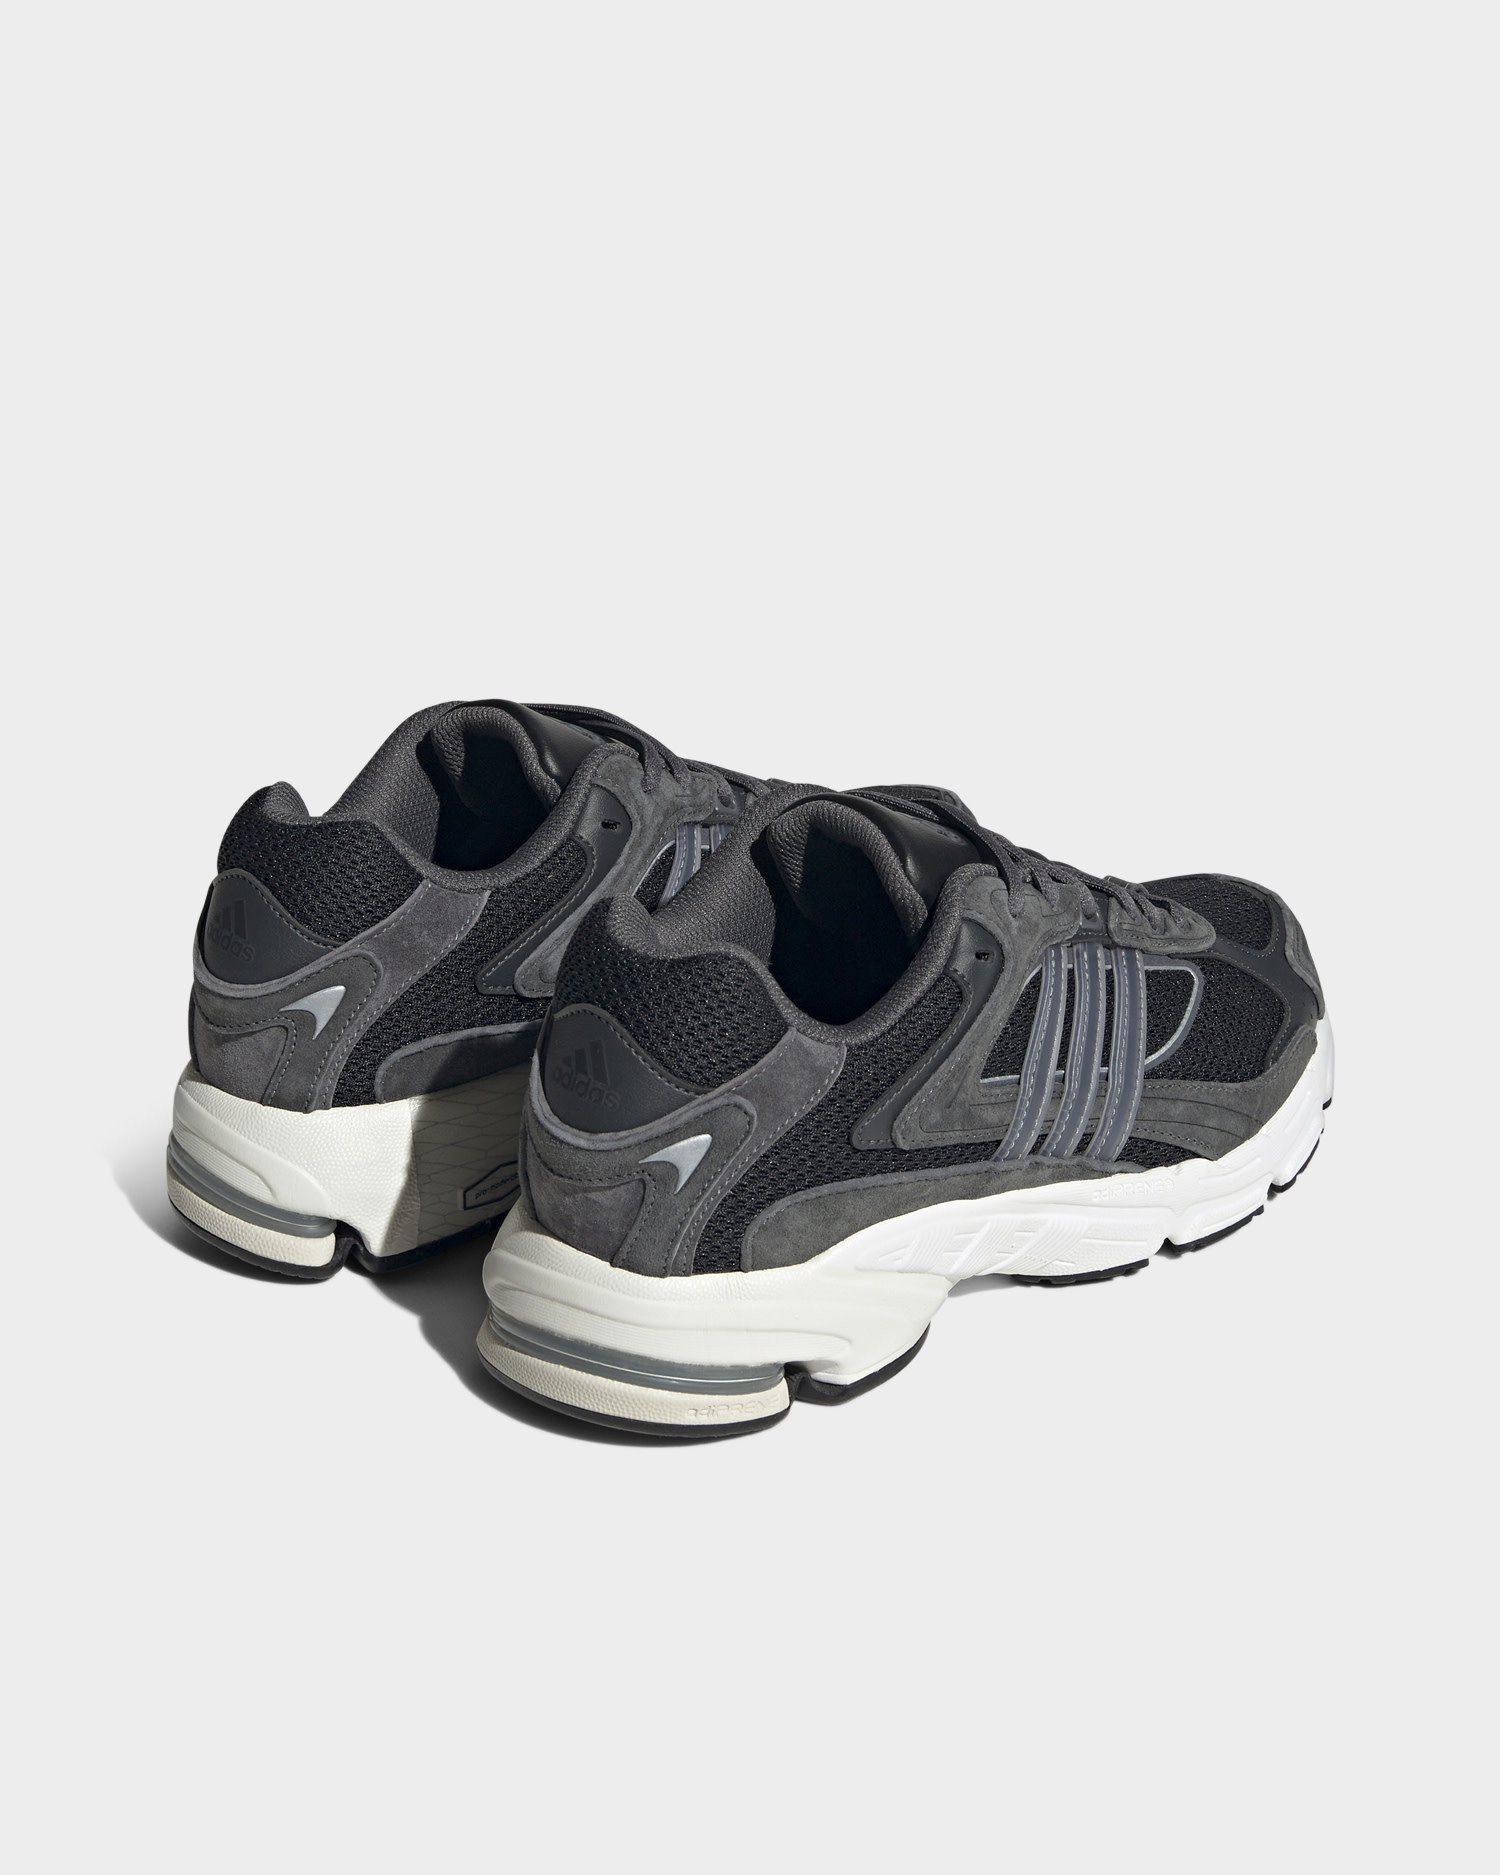 Adidas Response CL Core Black Grey Carbon